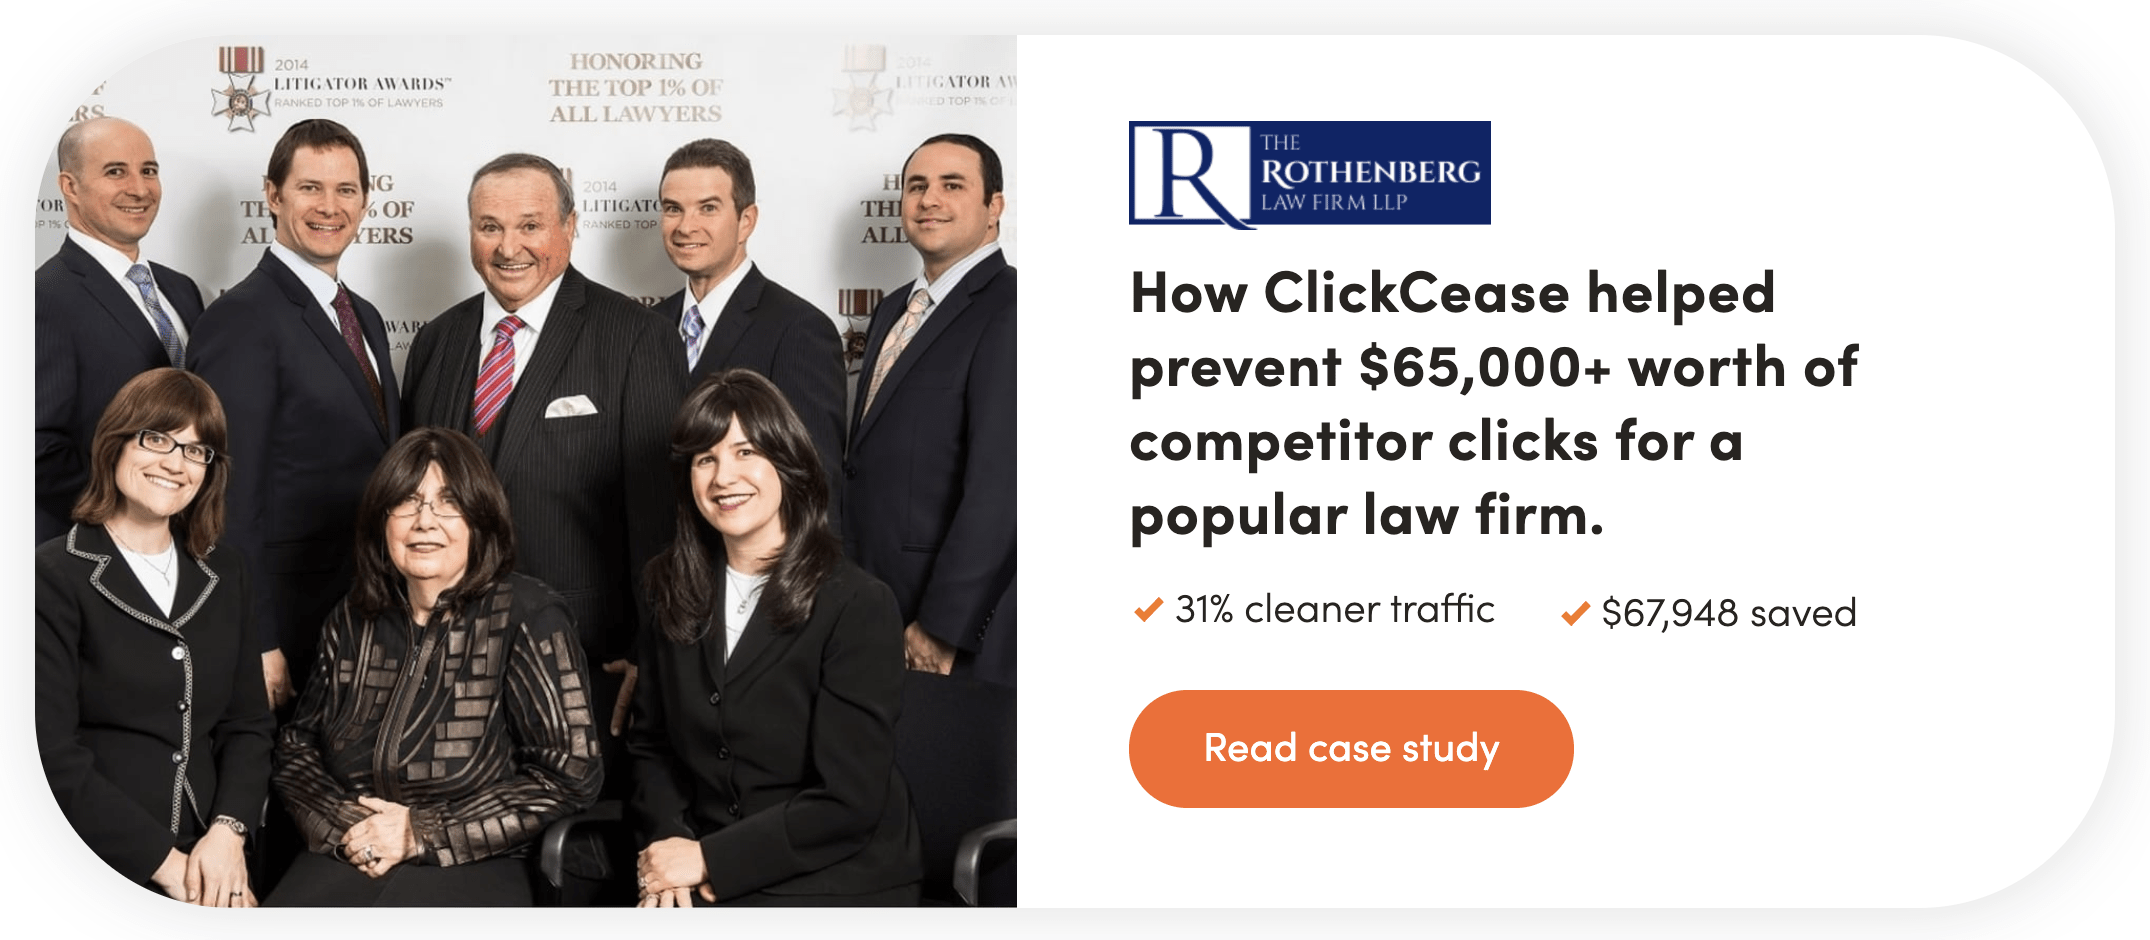 saas case study headline example by clickcease